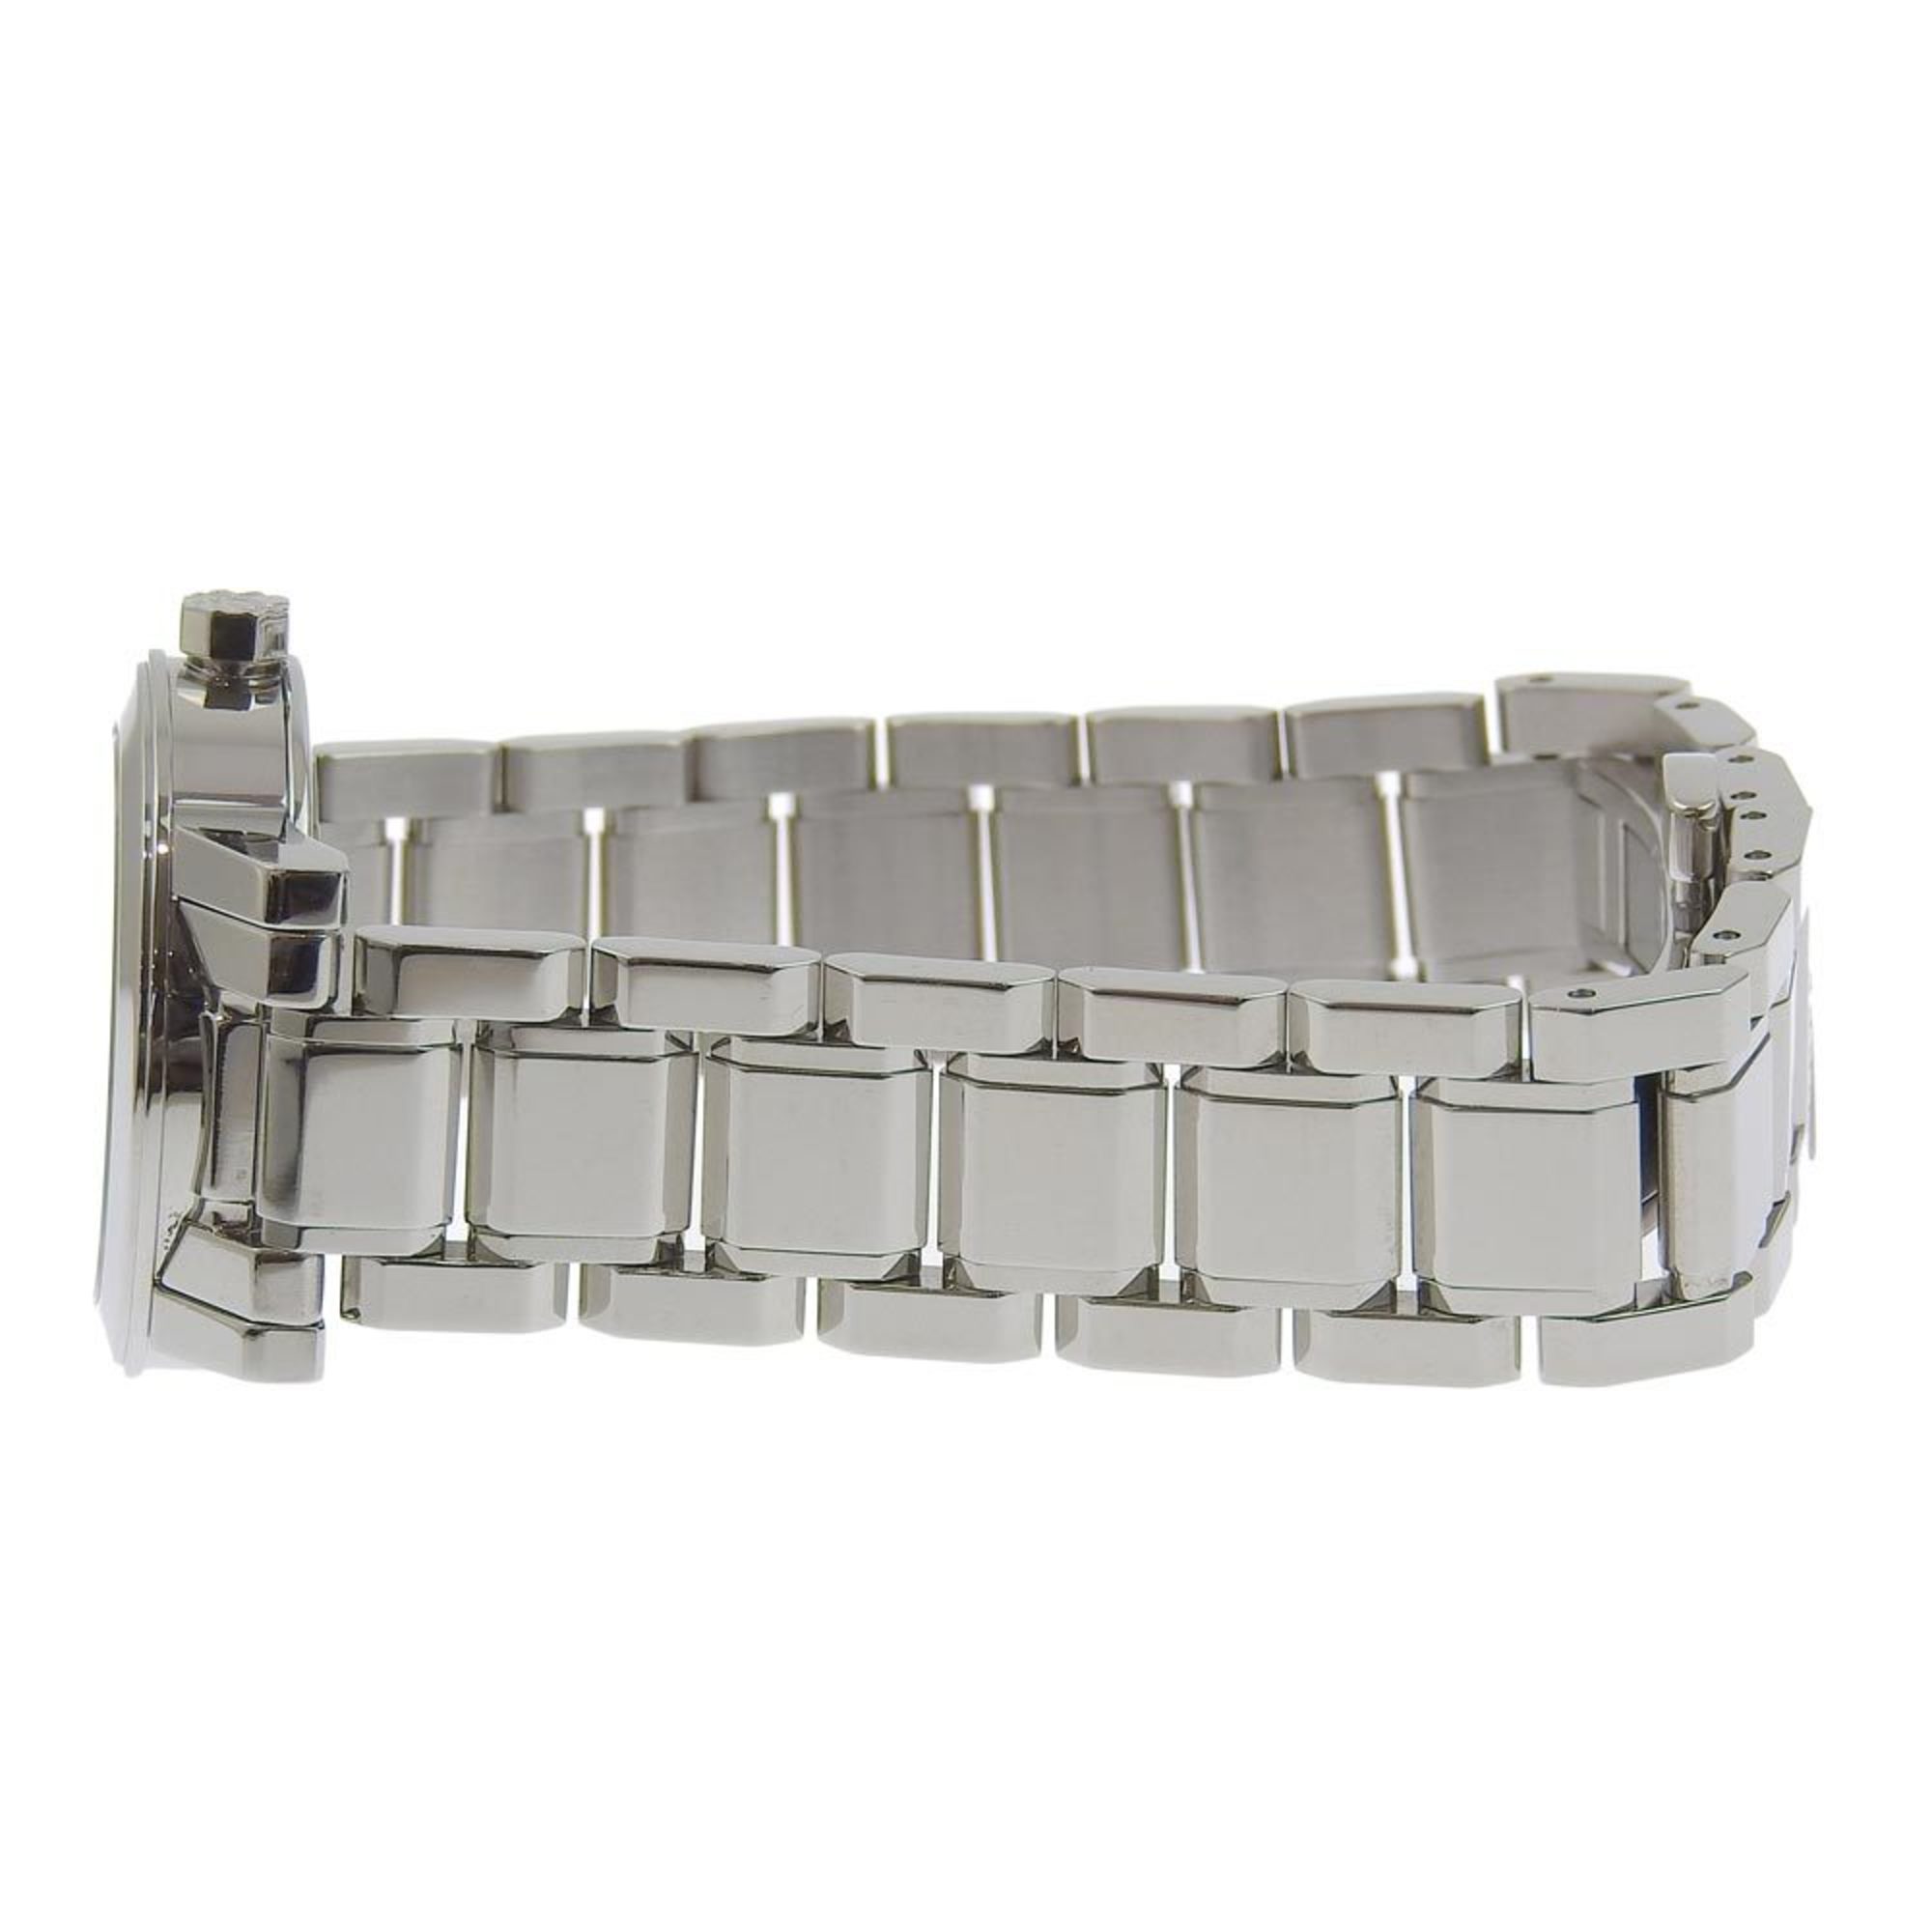 Burberry Watch BU9229 Stainless Steel Silver Quartz Analog Display Ladies Dial